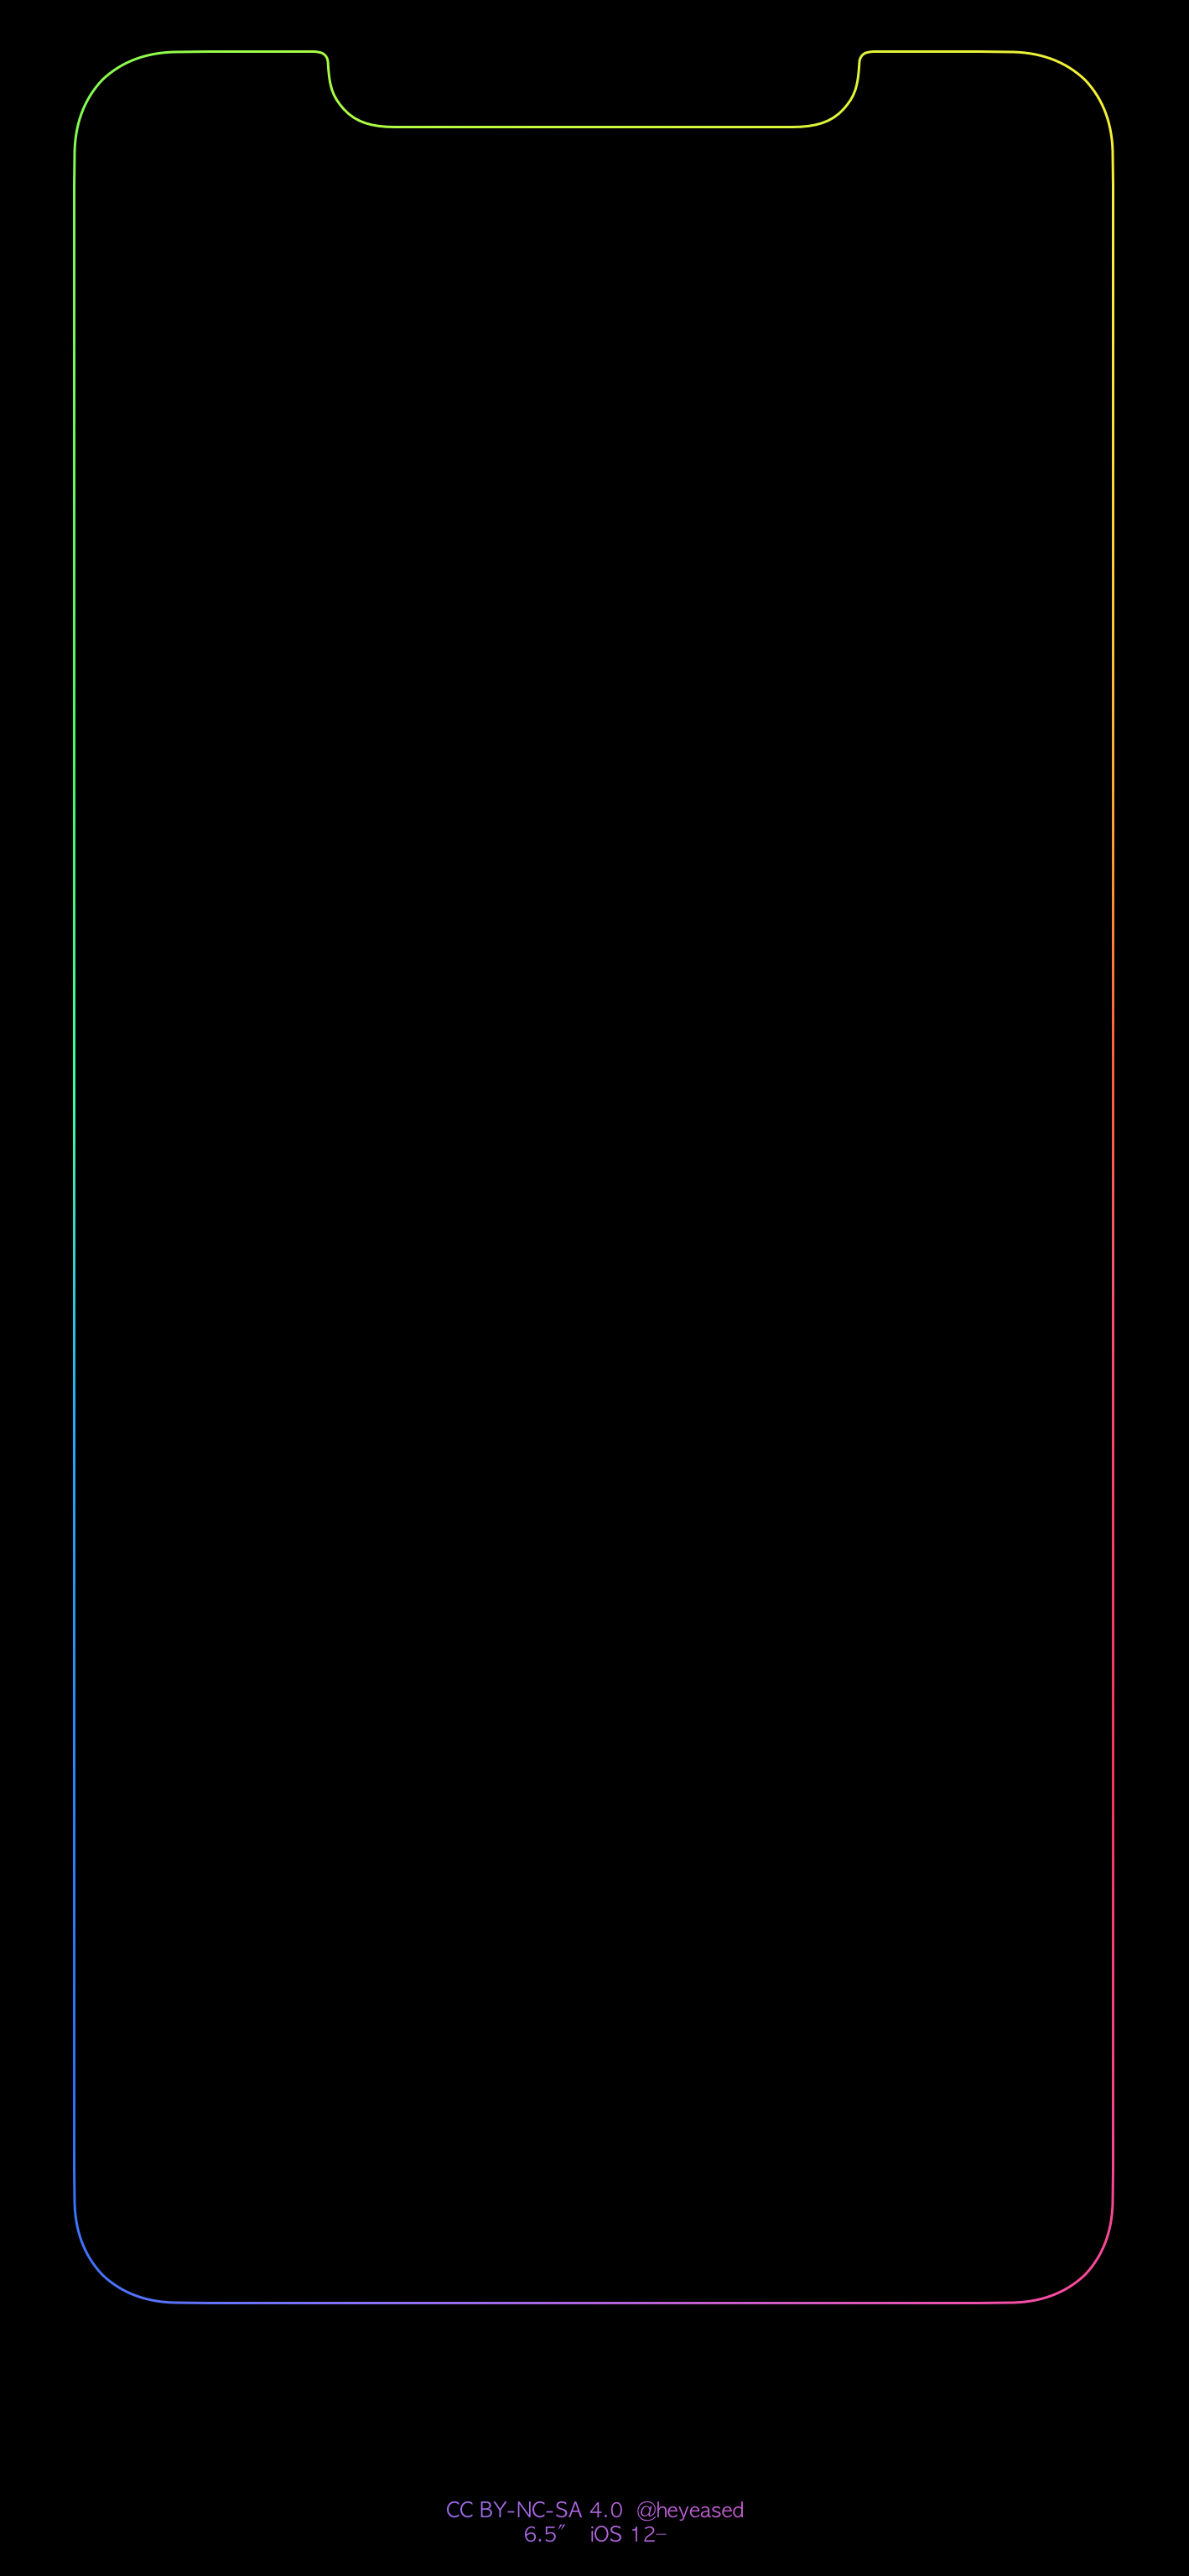 Iphone Xs Max边框发光壁纸大全苹果xs Max黑色发光边框壁纸 电脑百事网